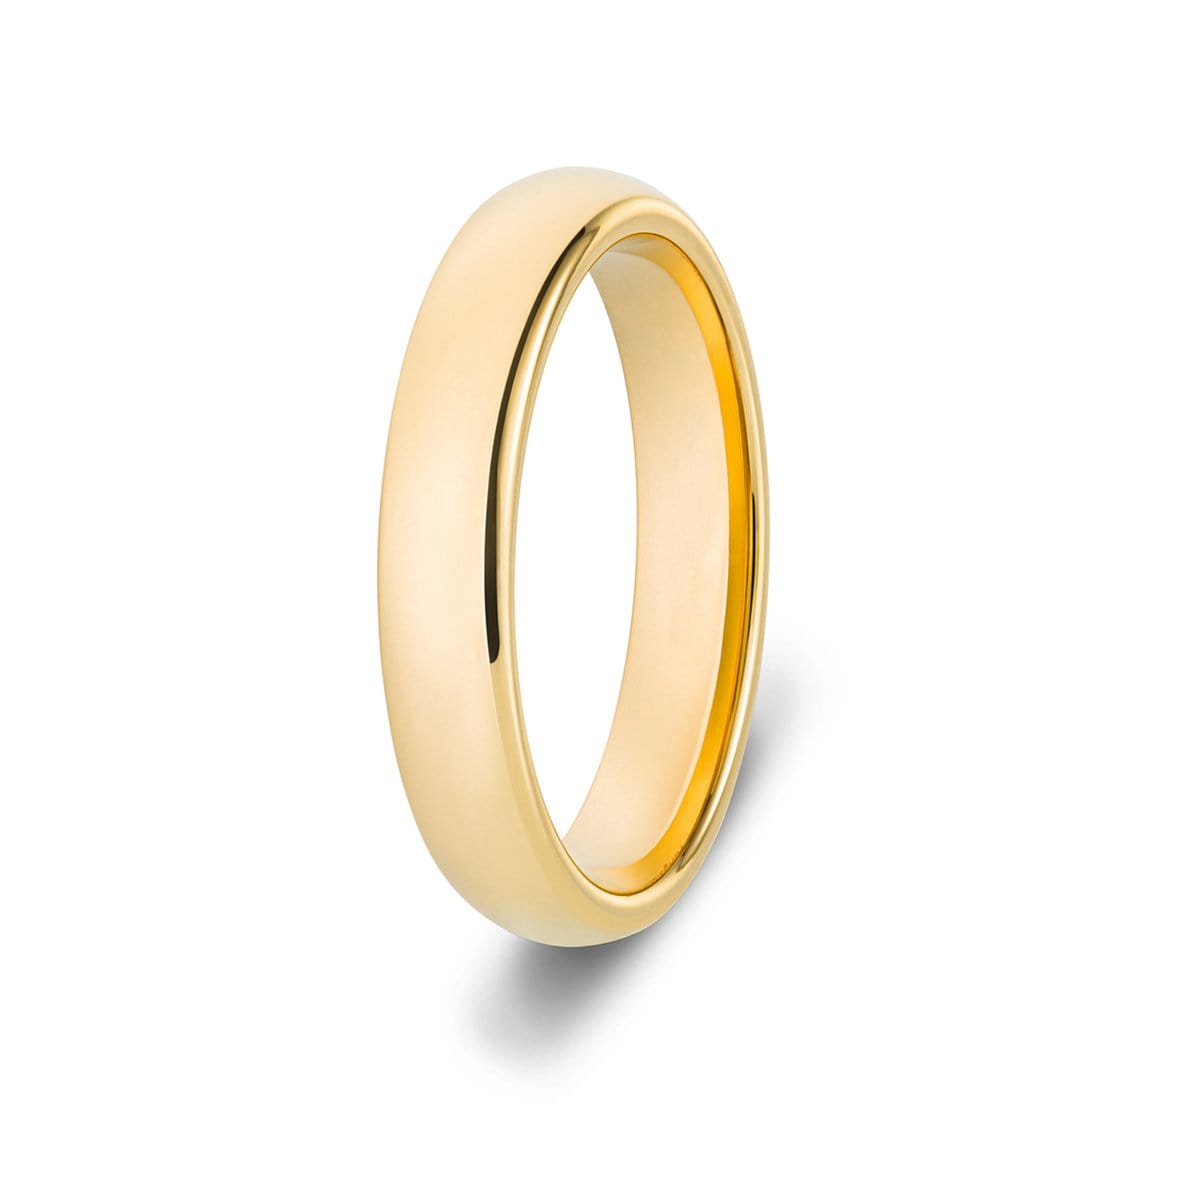 Etrnl | Silicone Rings For Men & Women - Wedding Rings & Bands